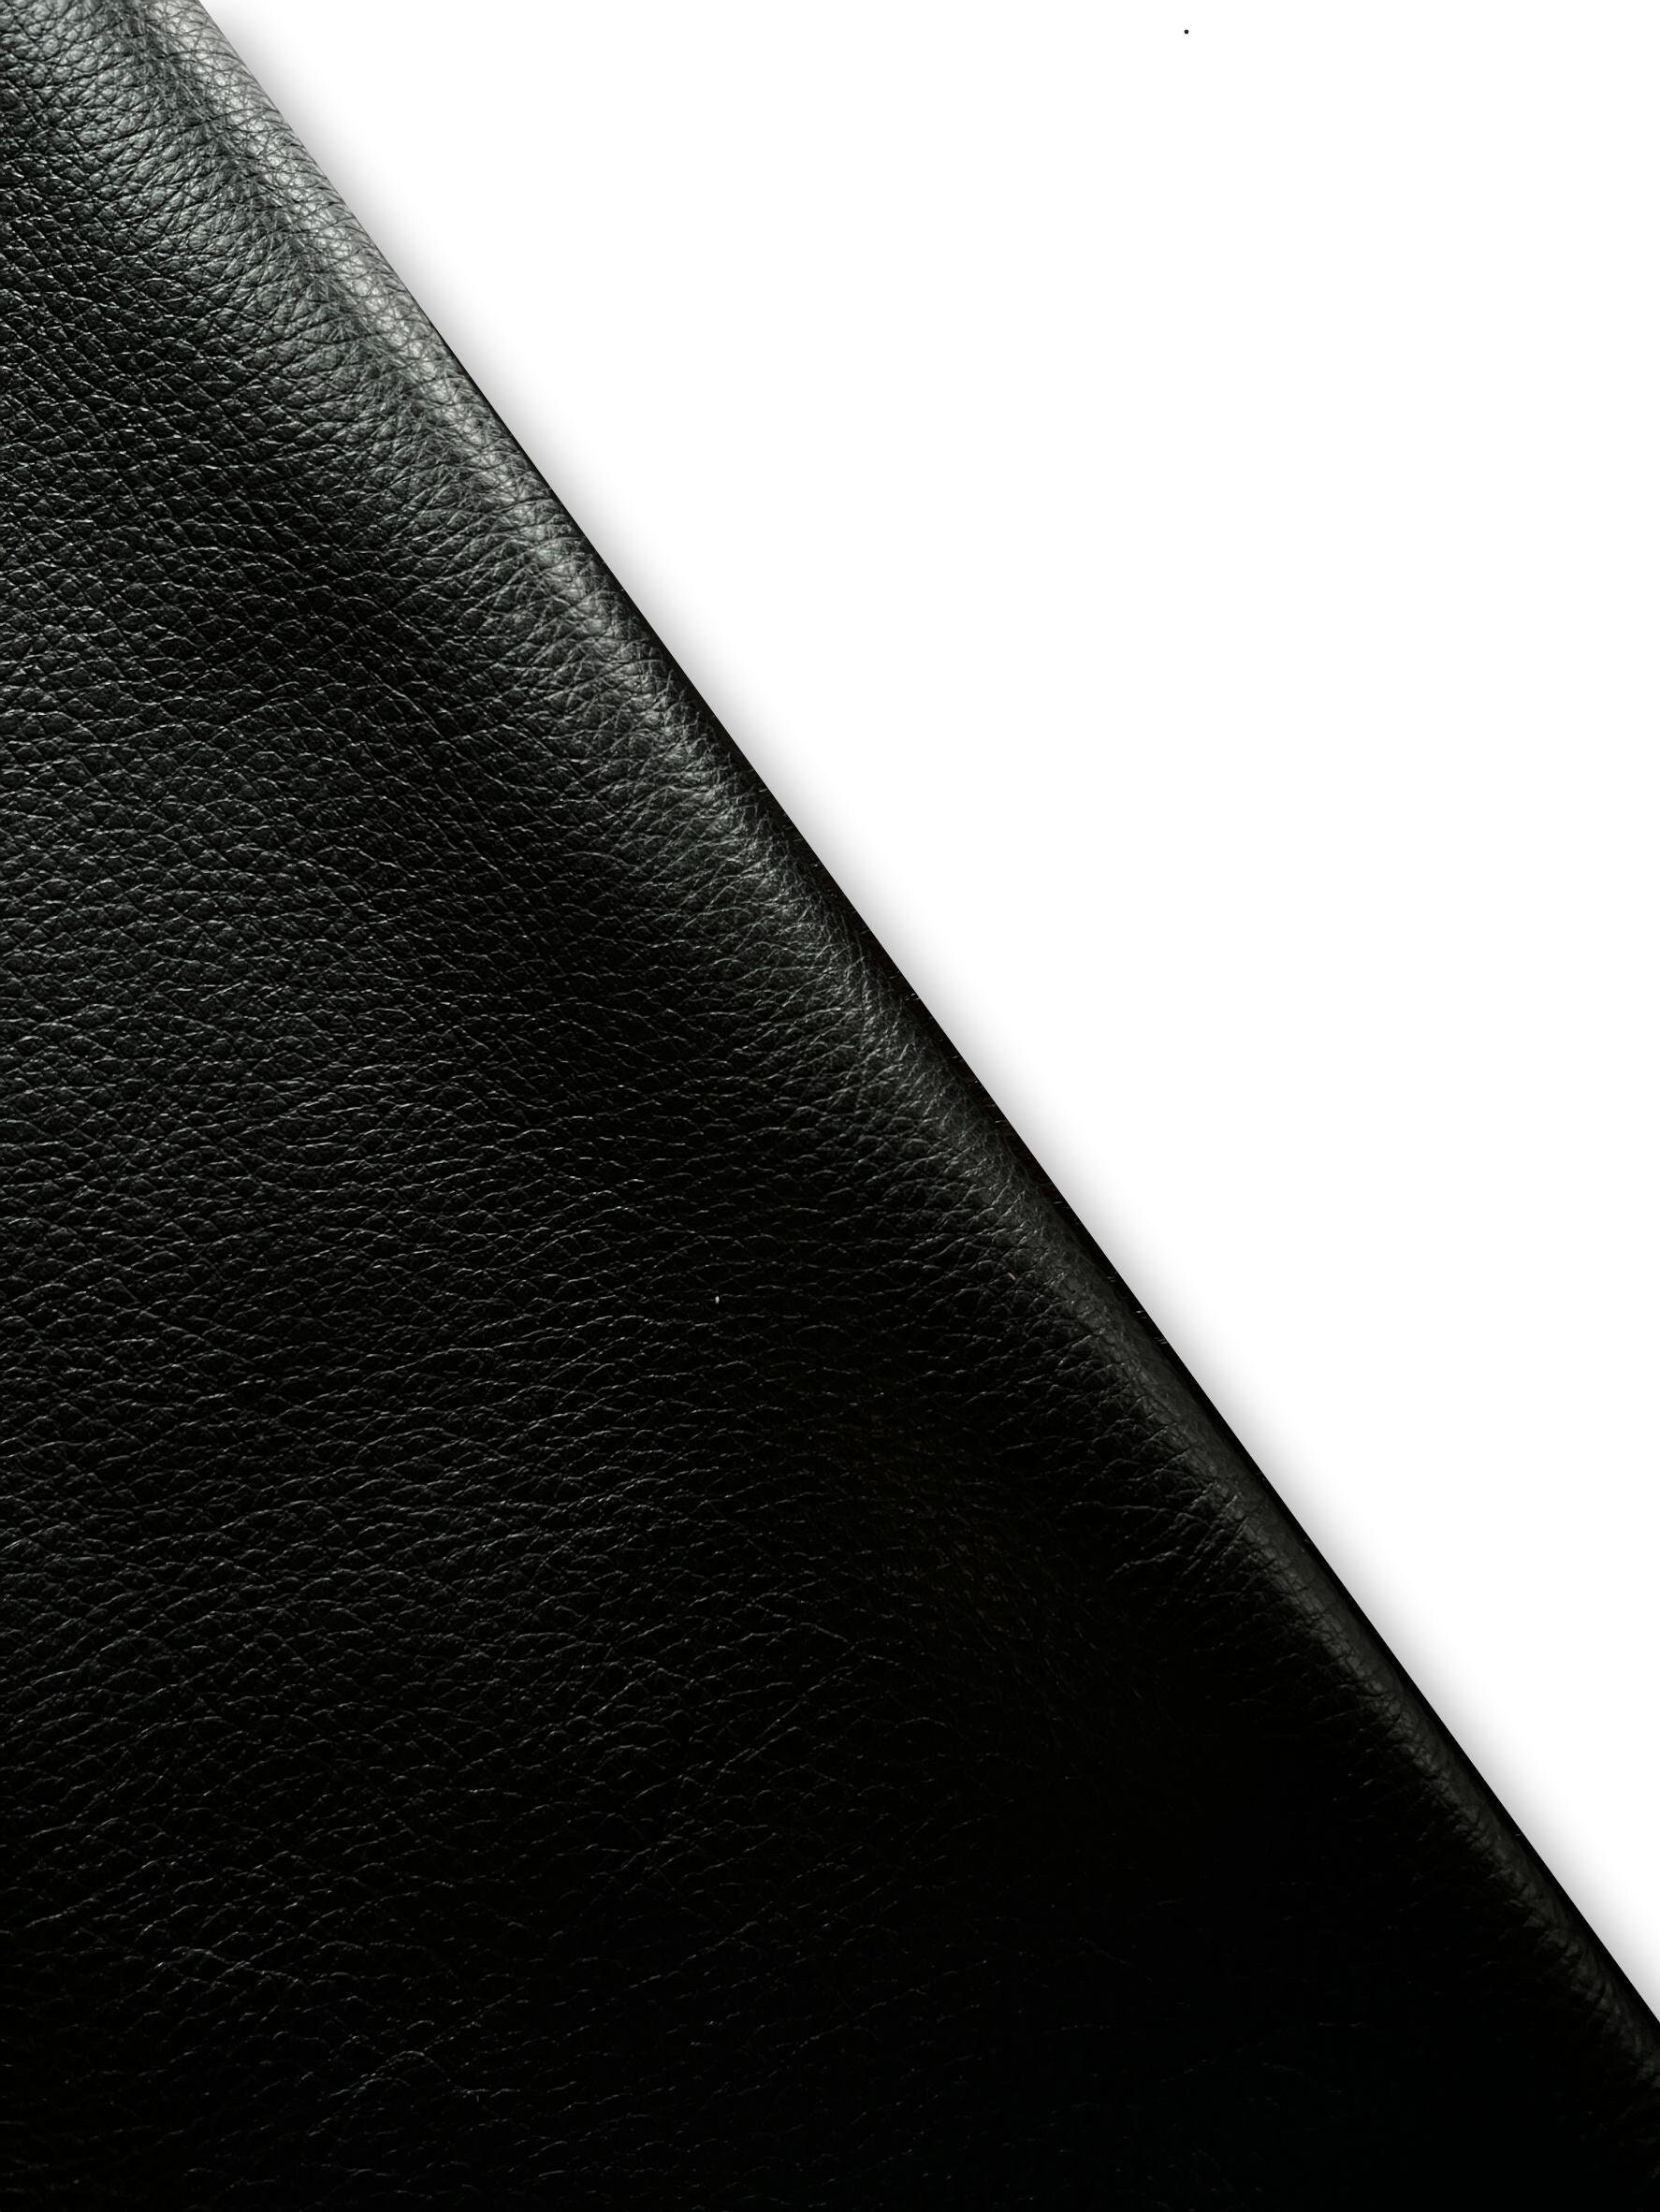 Mandala Crafts Genuine Leather Strap - Black Cowhide Leather